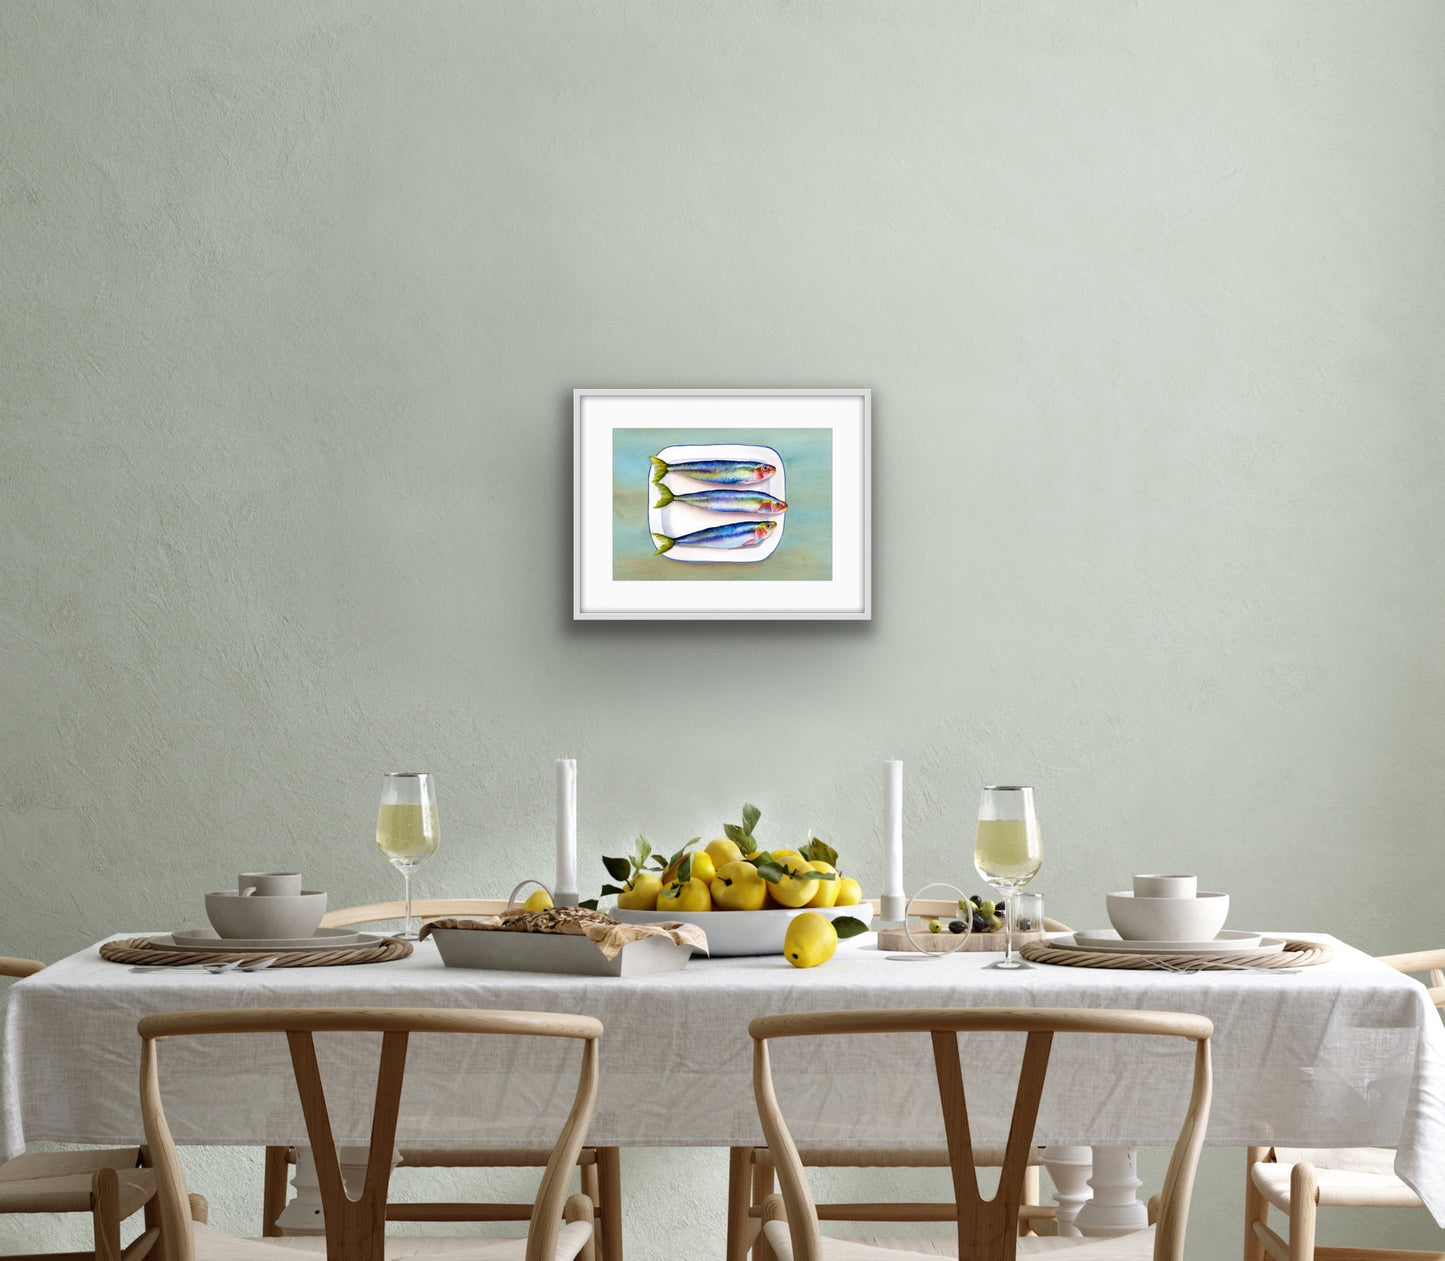 Sardines For Supper - Original Watercolour